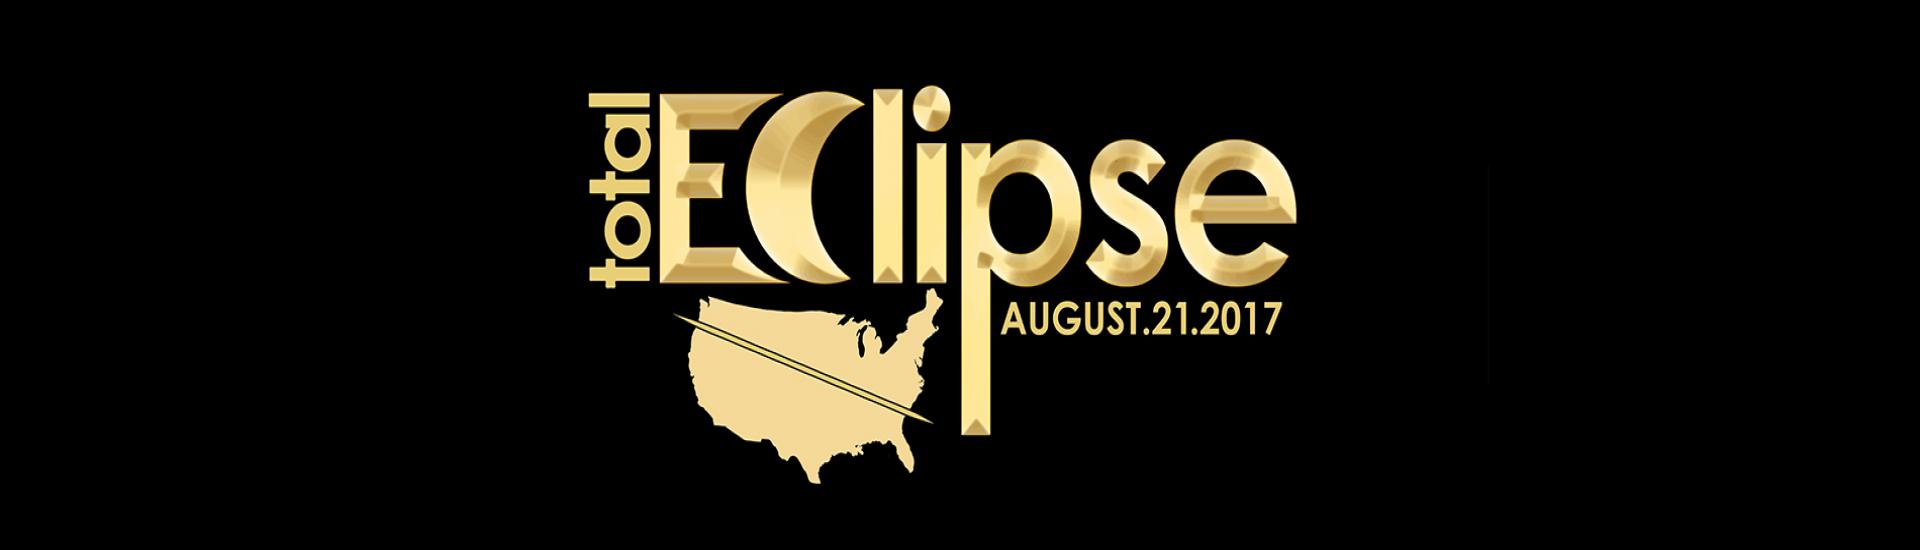 Total Eclipse Logo